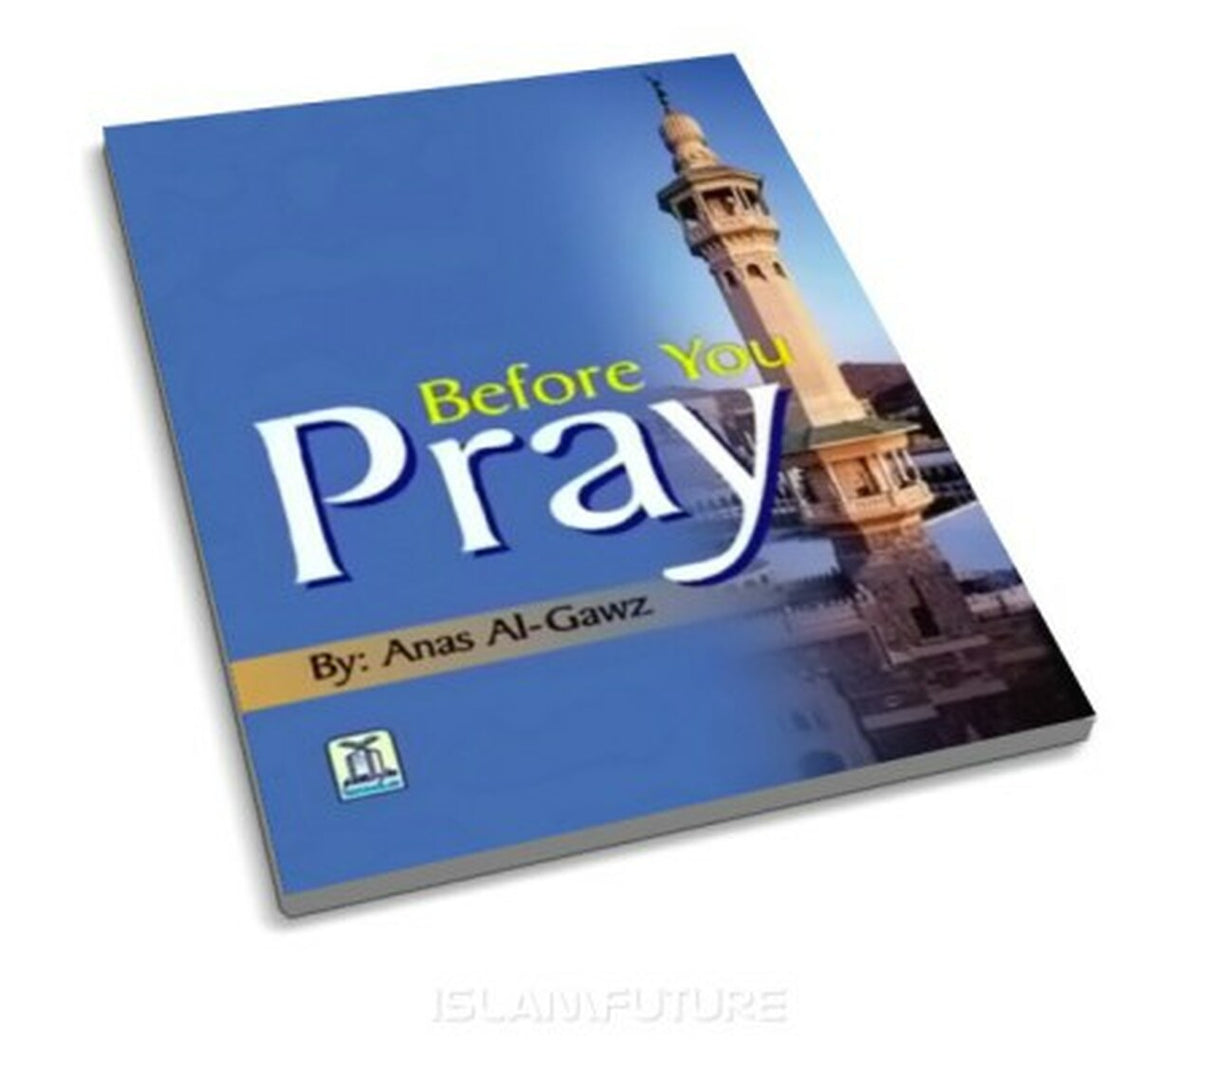 Before you Pray By Anas Al-Gawz